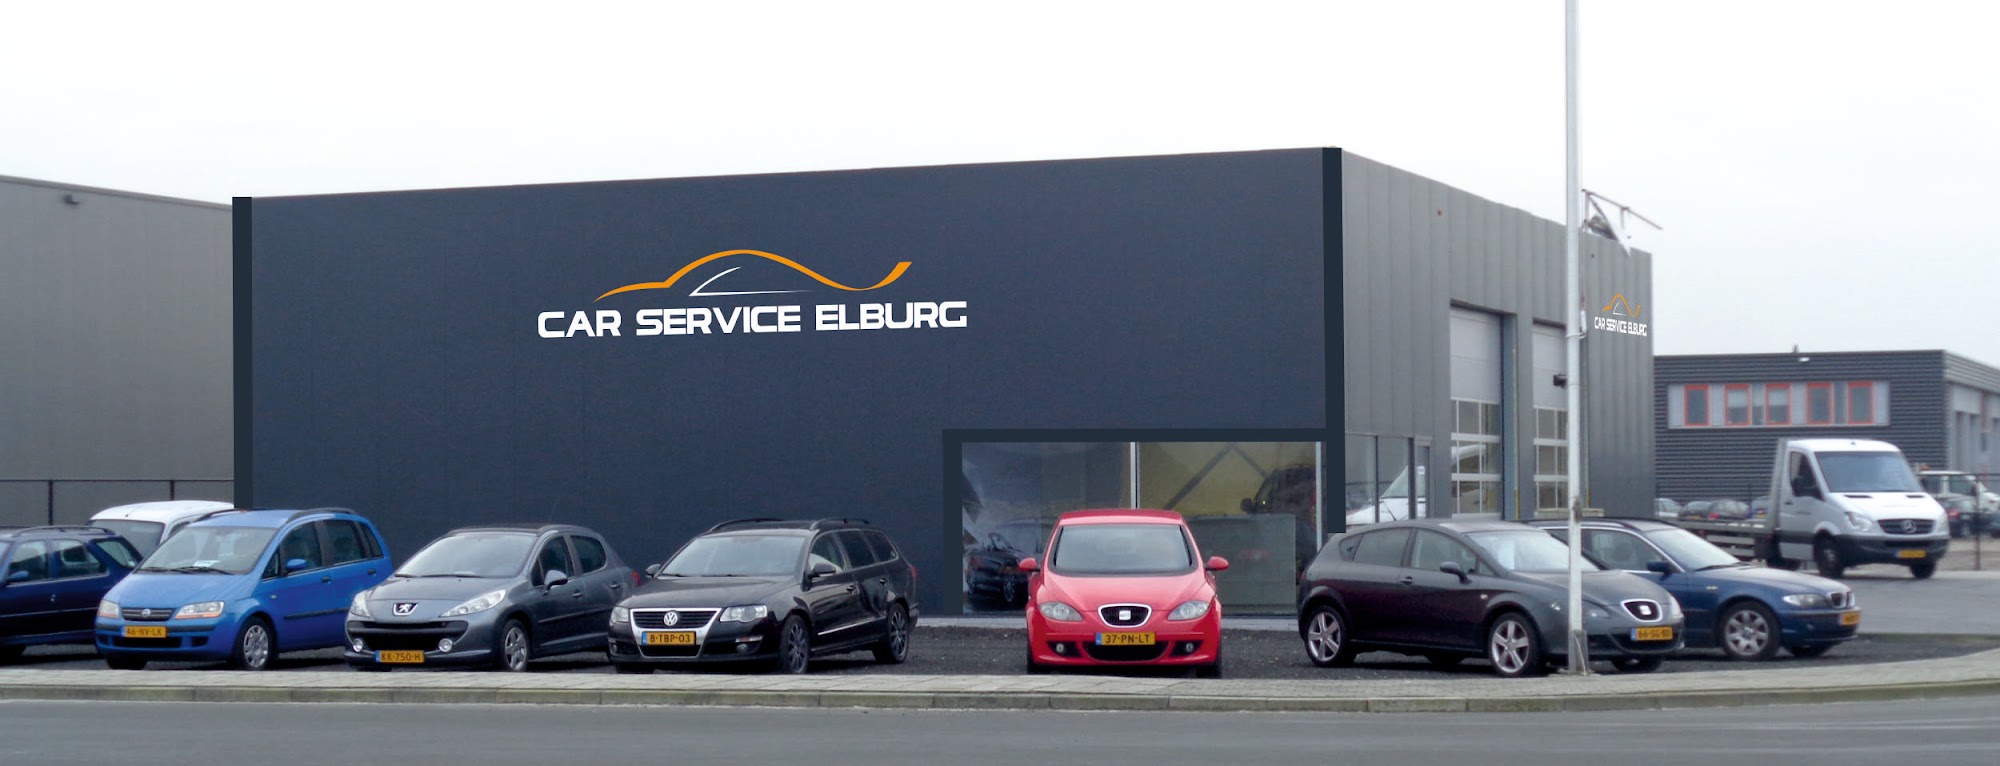 Car Service Elburg